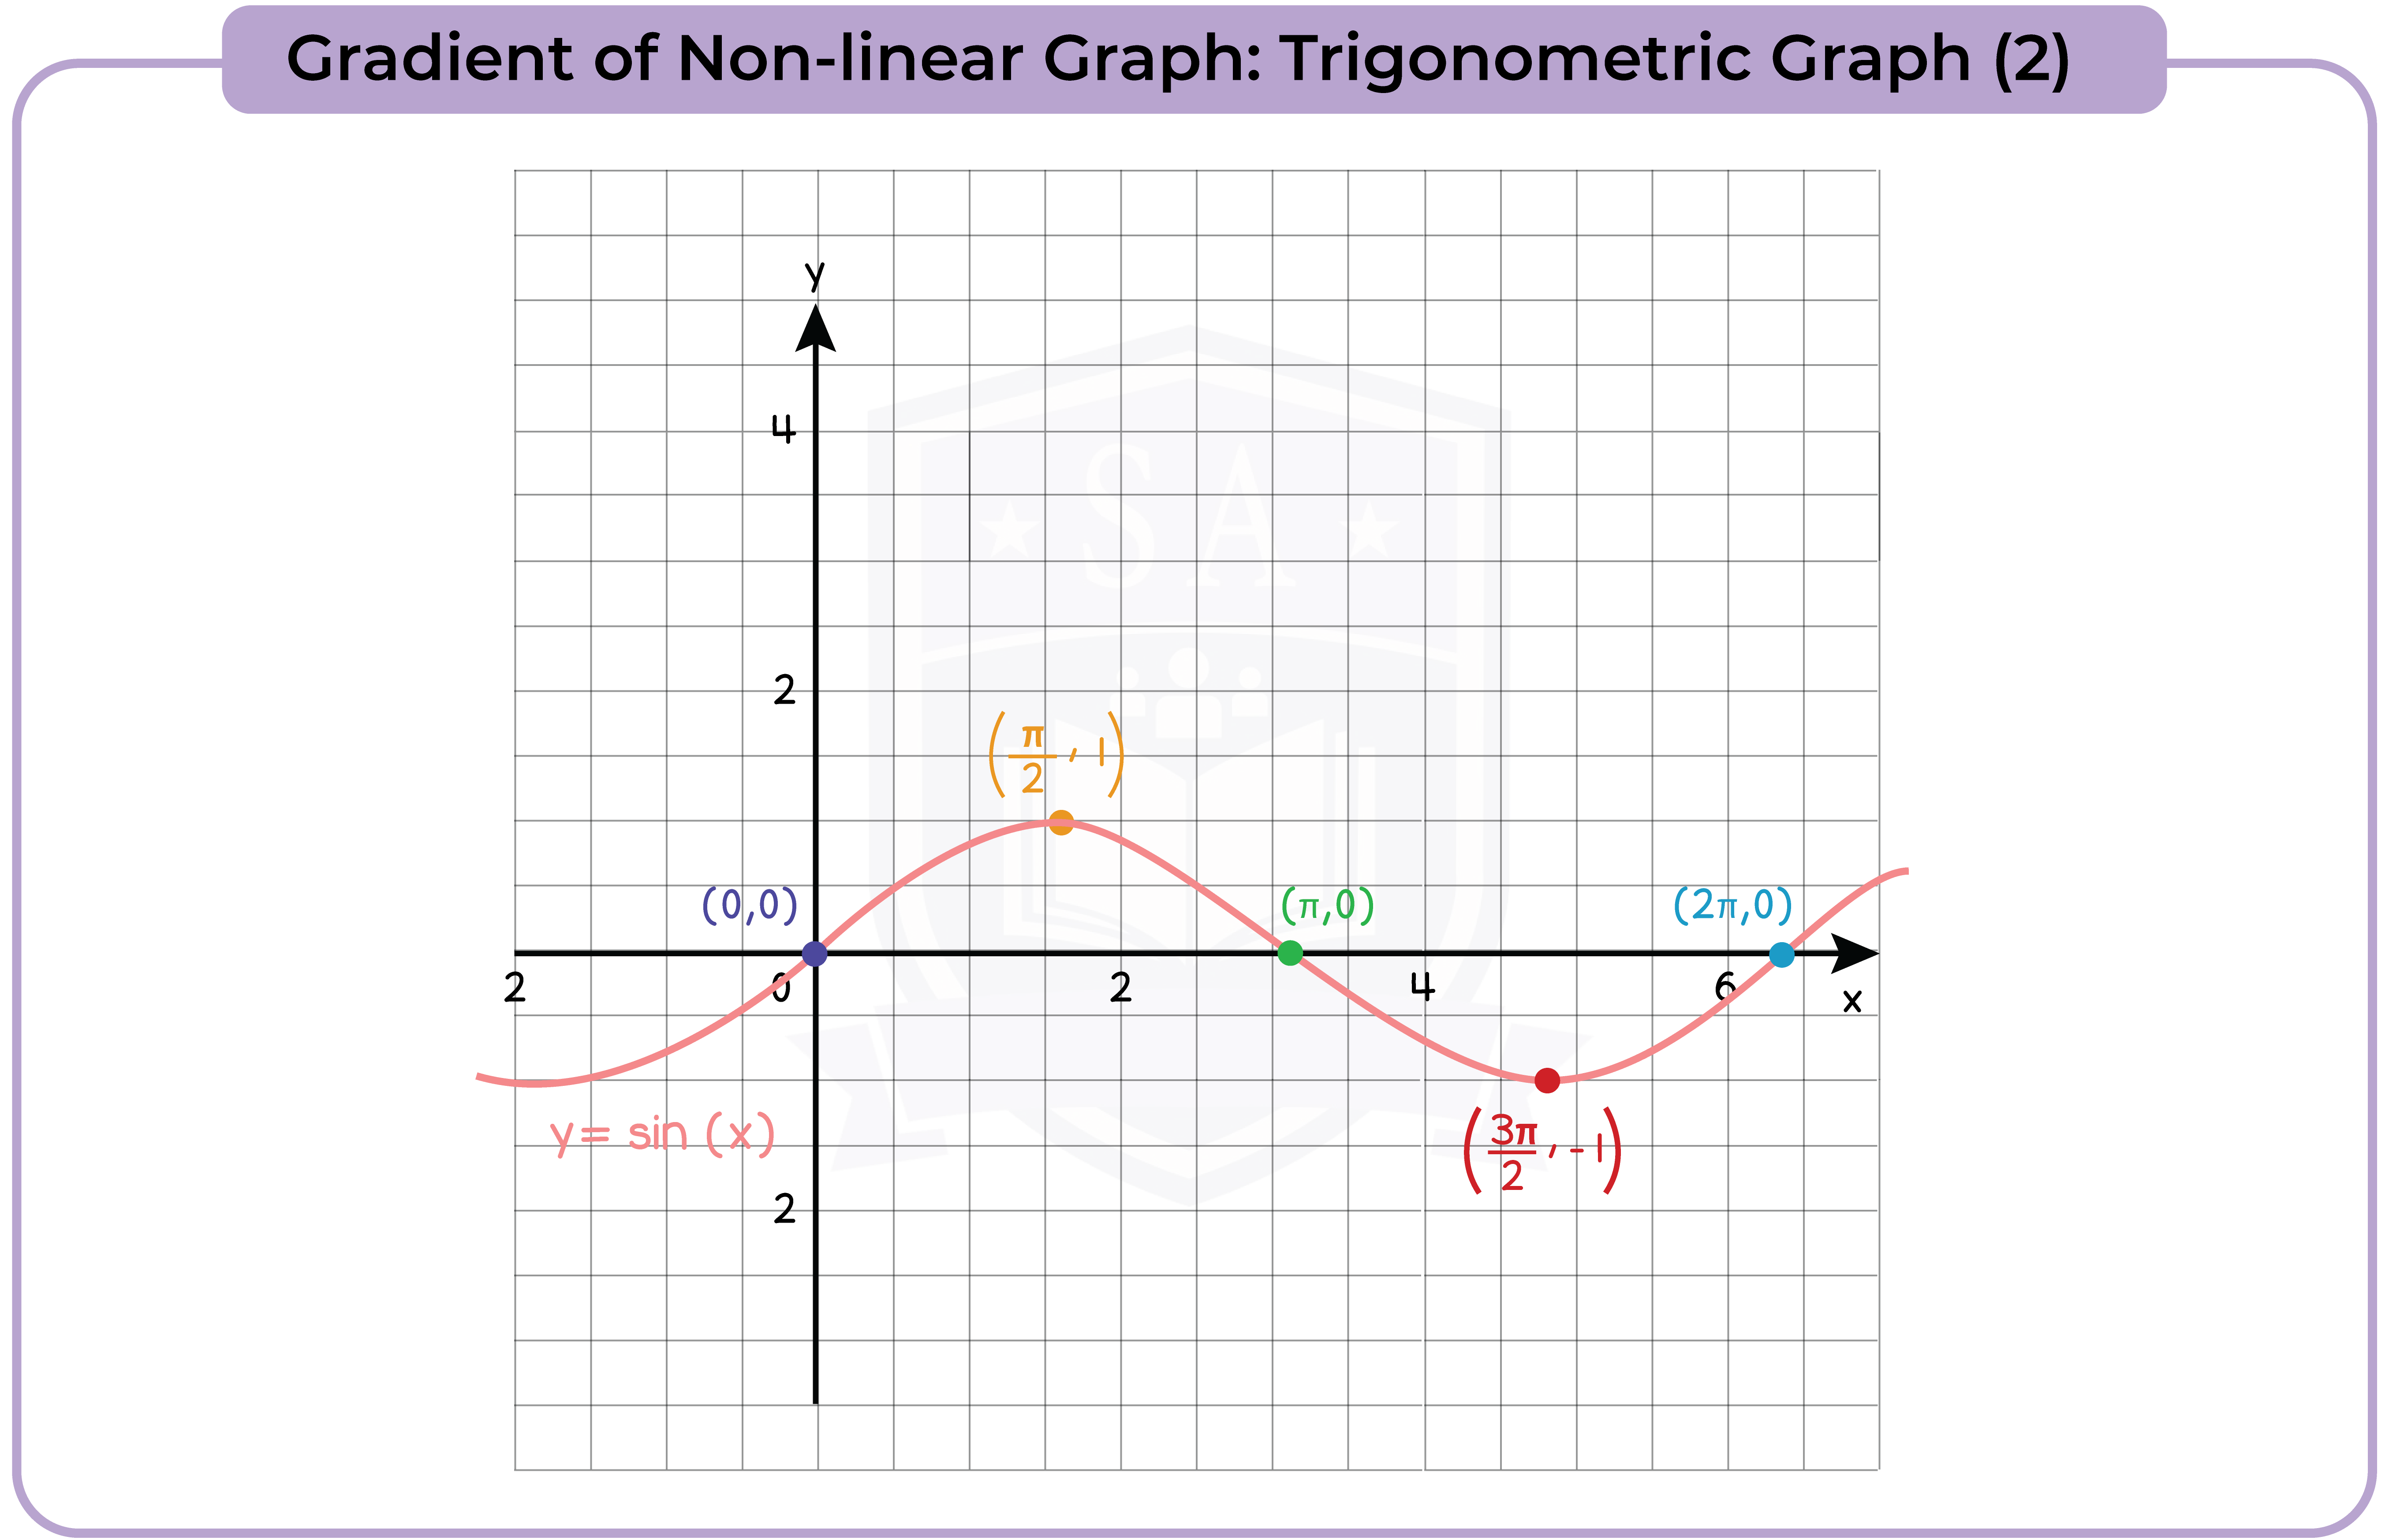 edexcel_igcse_mathematics a_topic 23_graphs_025_Gradient of Non-linear Graph: Trigonometric Graph (2)